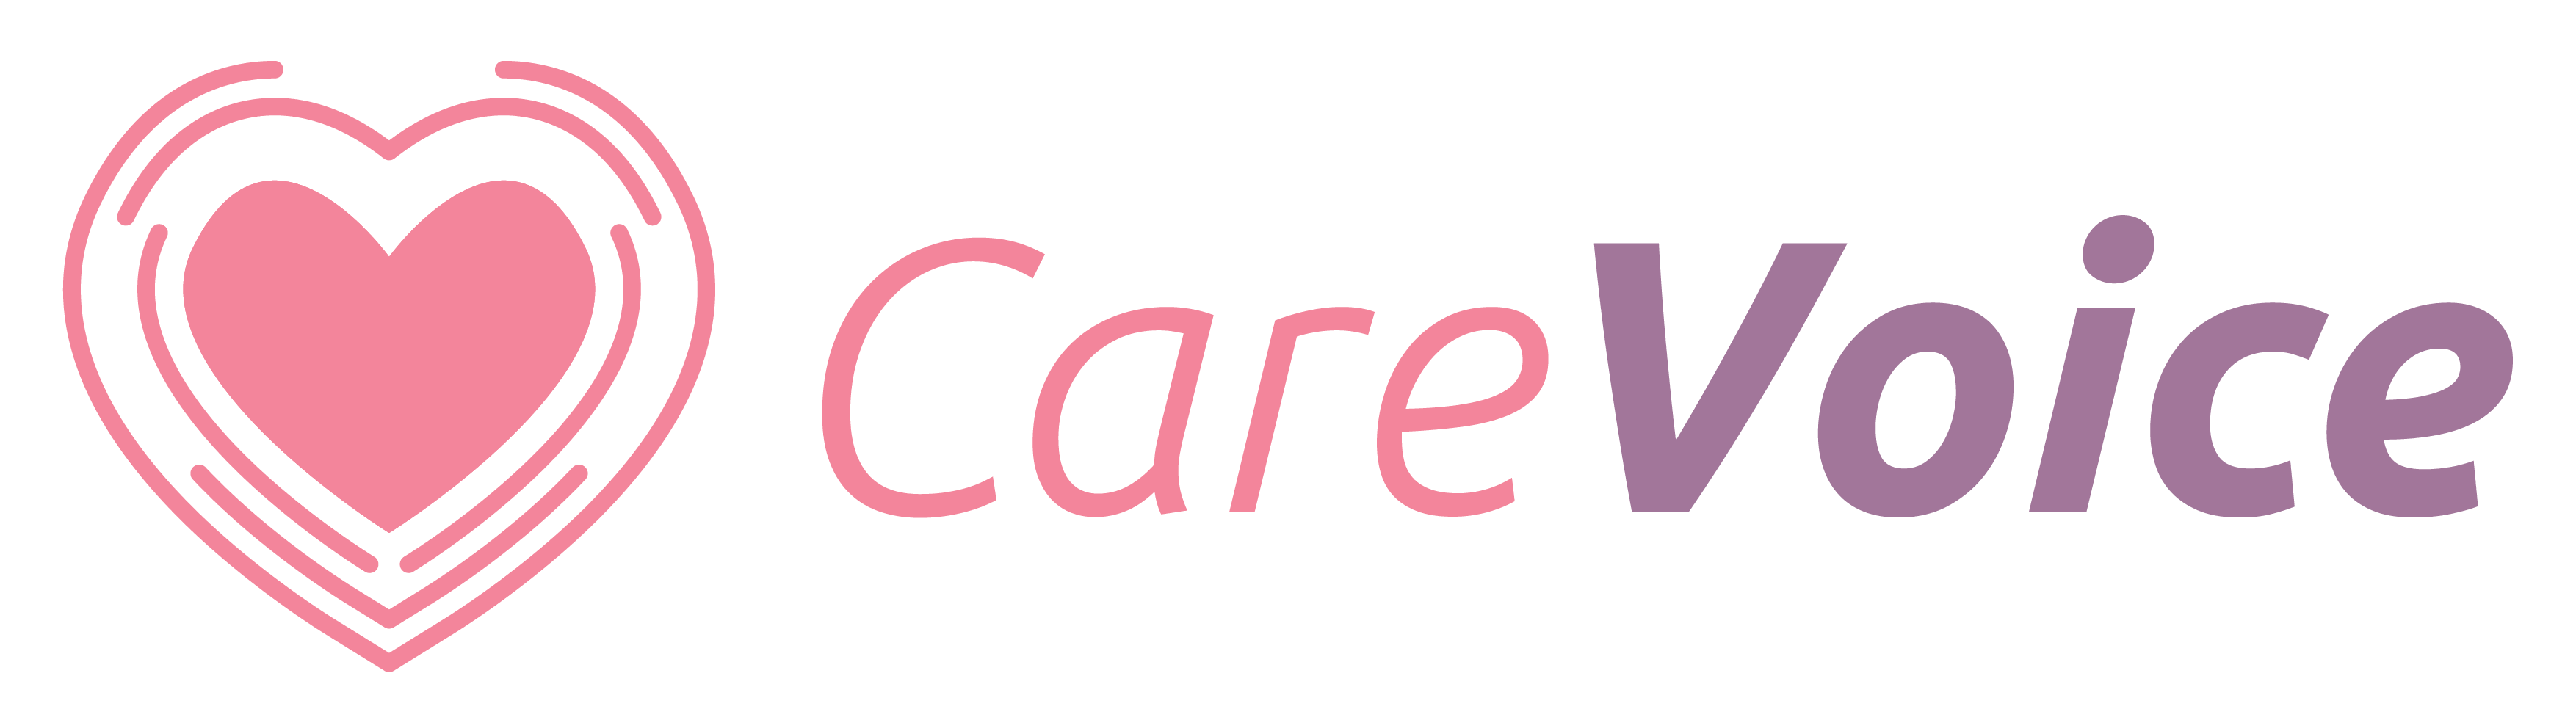 Care Voice - logo